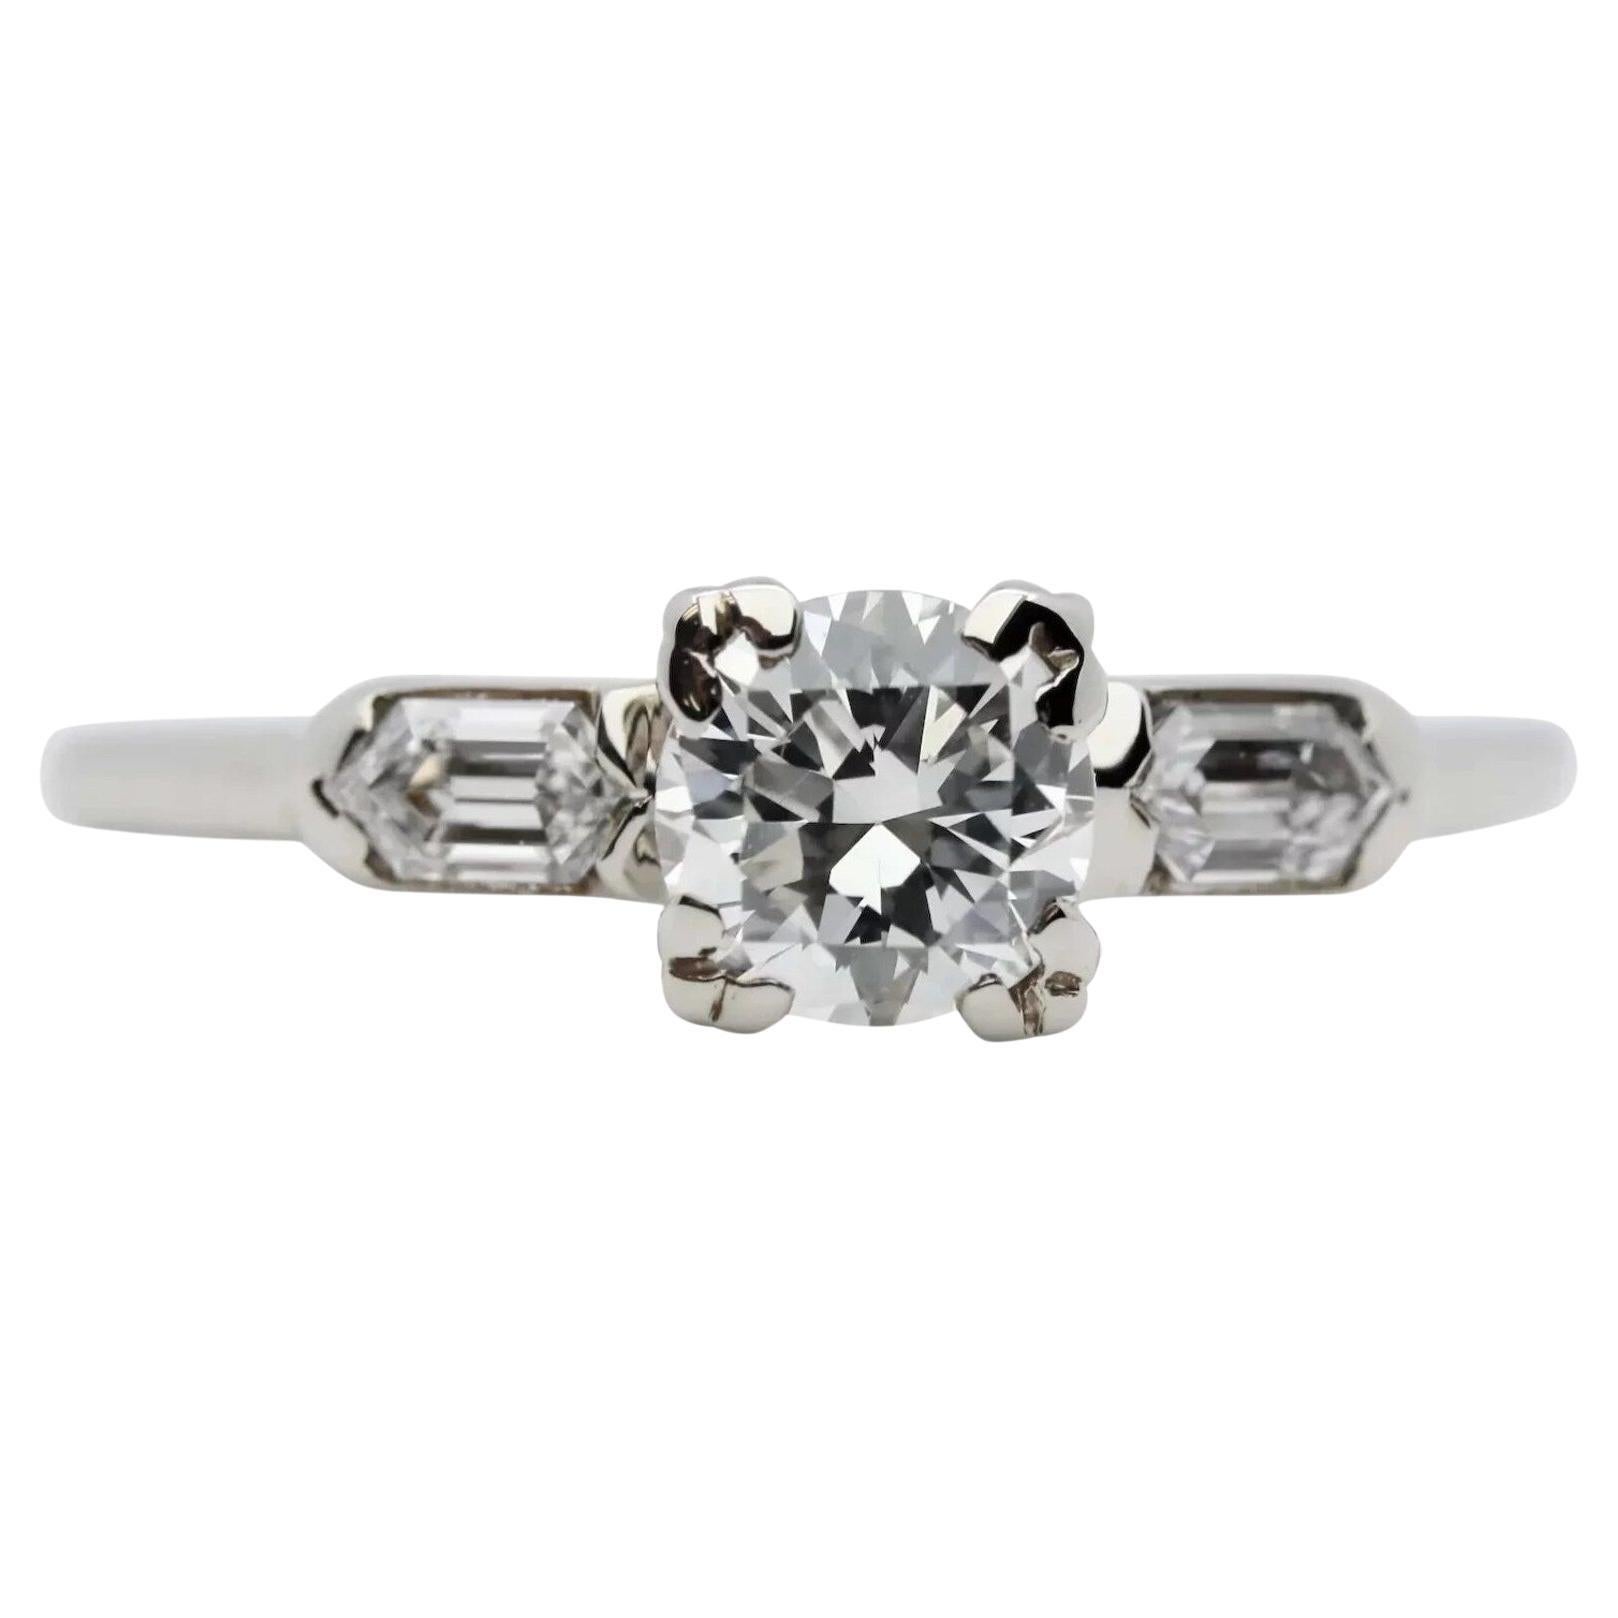 Mid Century European & Hexagon Cut Diamond Engagement Ring in 14K White Gold